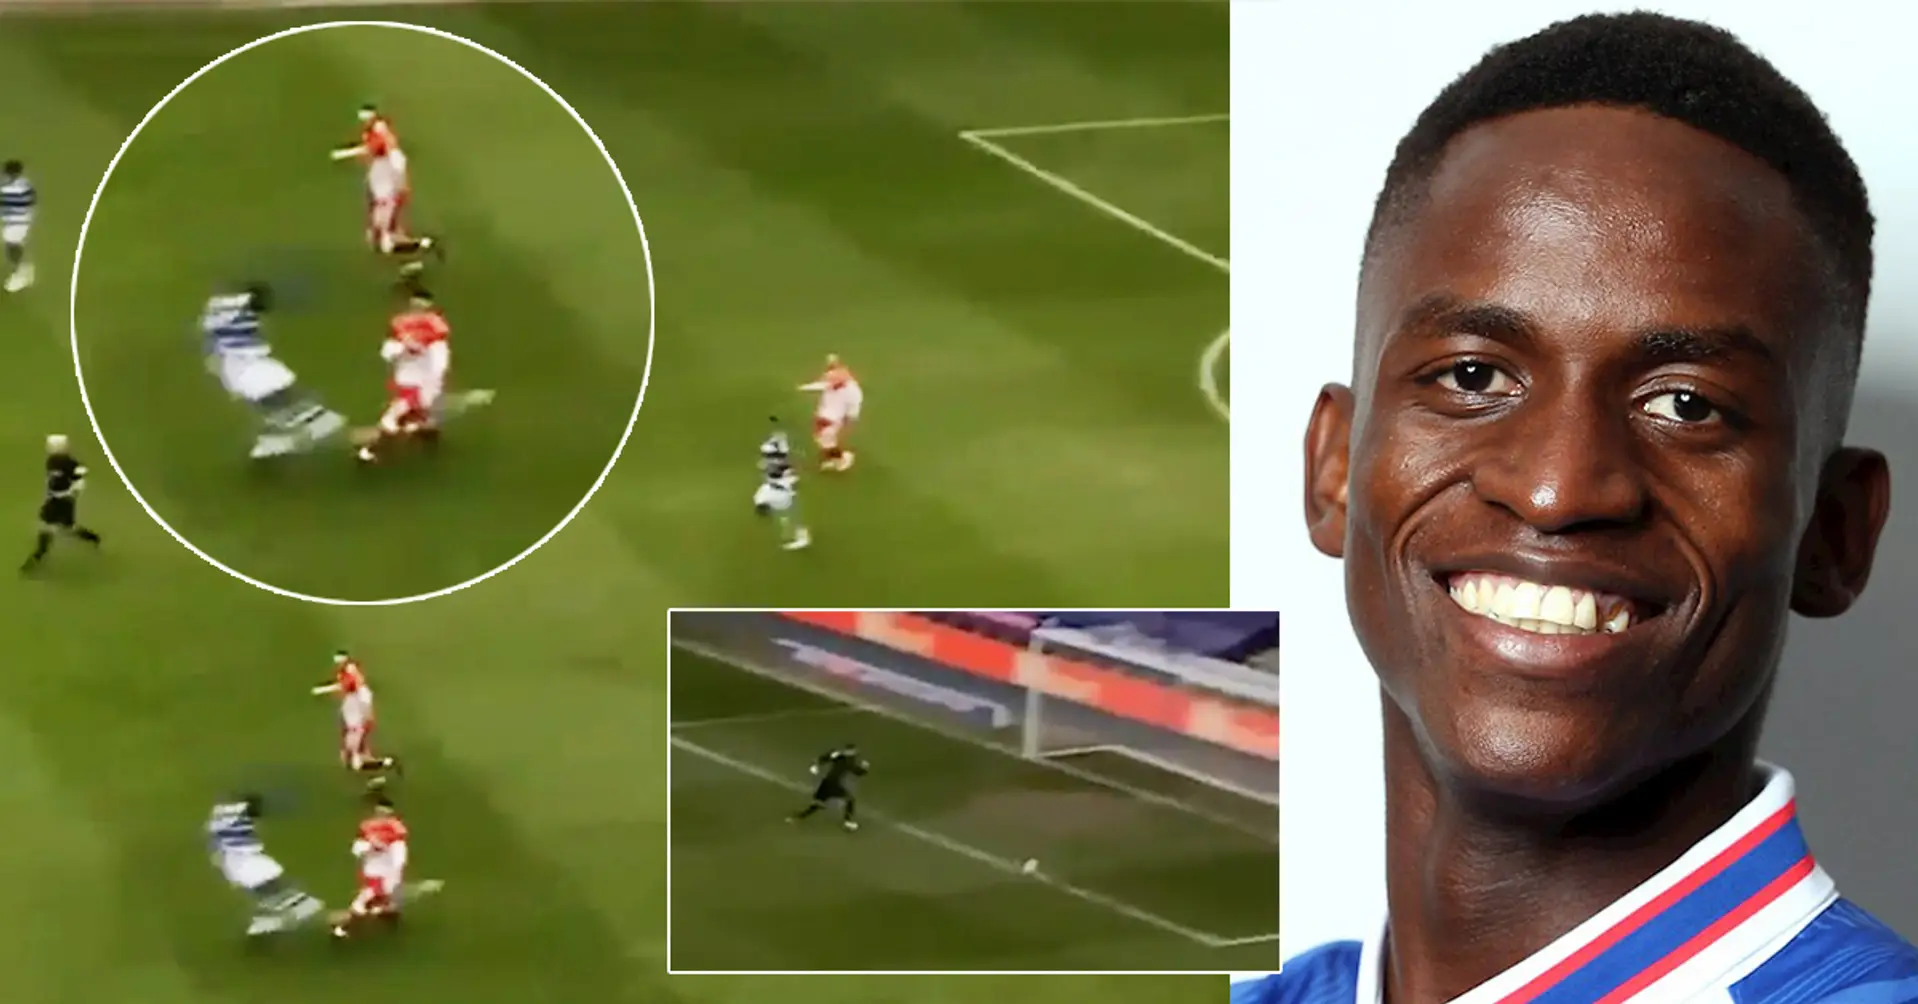 African footballer Semedo tackled his opponent so hard he accidentally scored a screamer